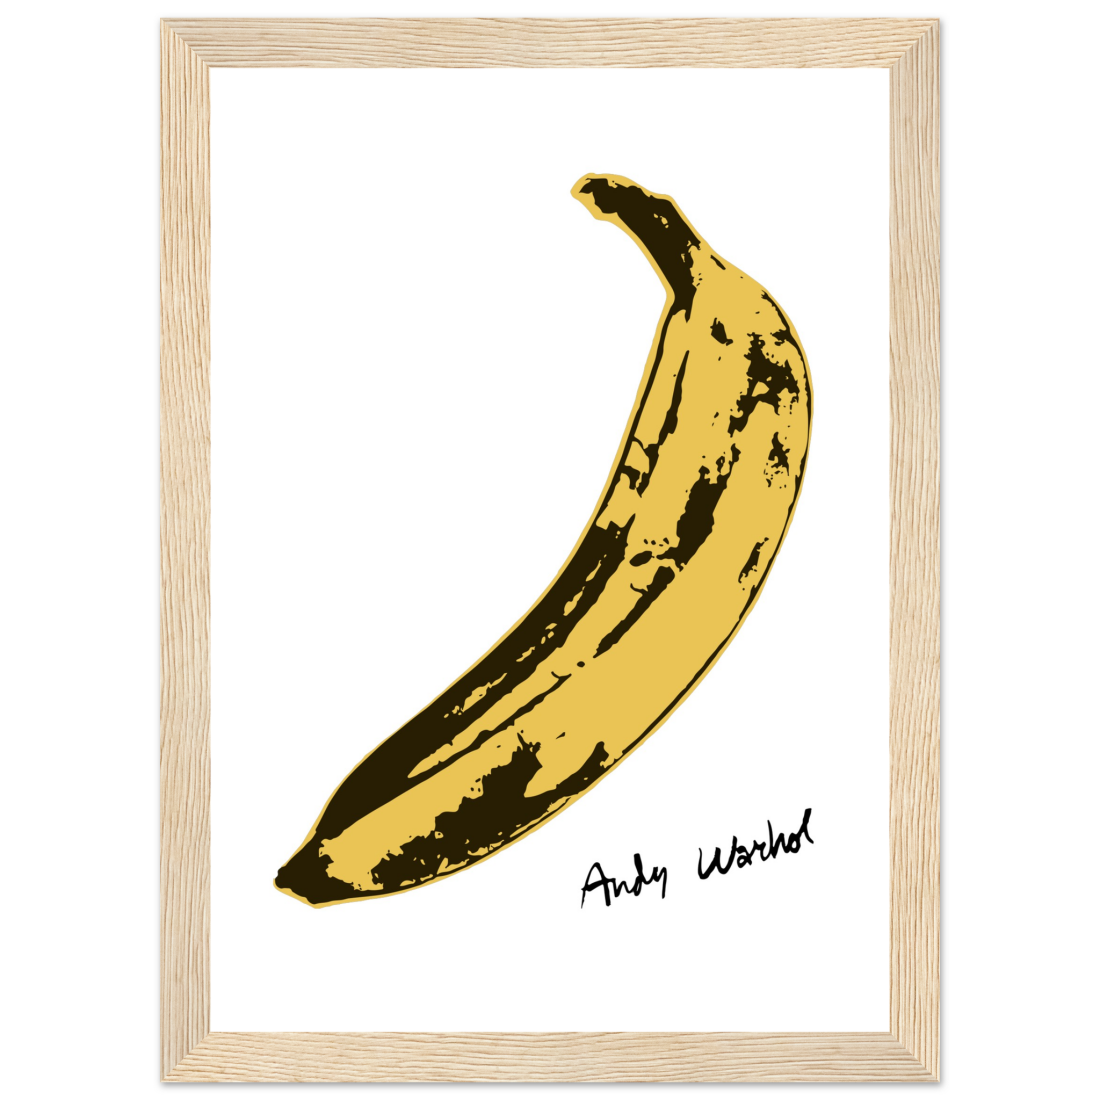 Andy Warhol's Banana, 1967 Pop Art Poster-11